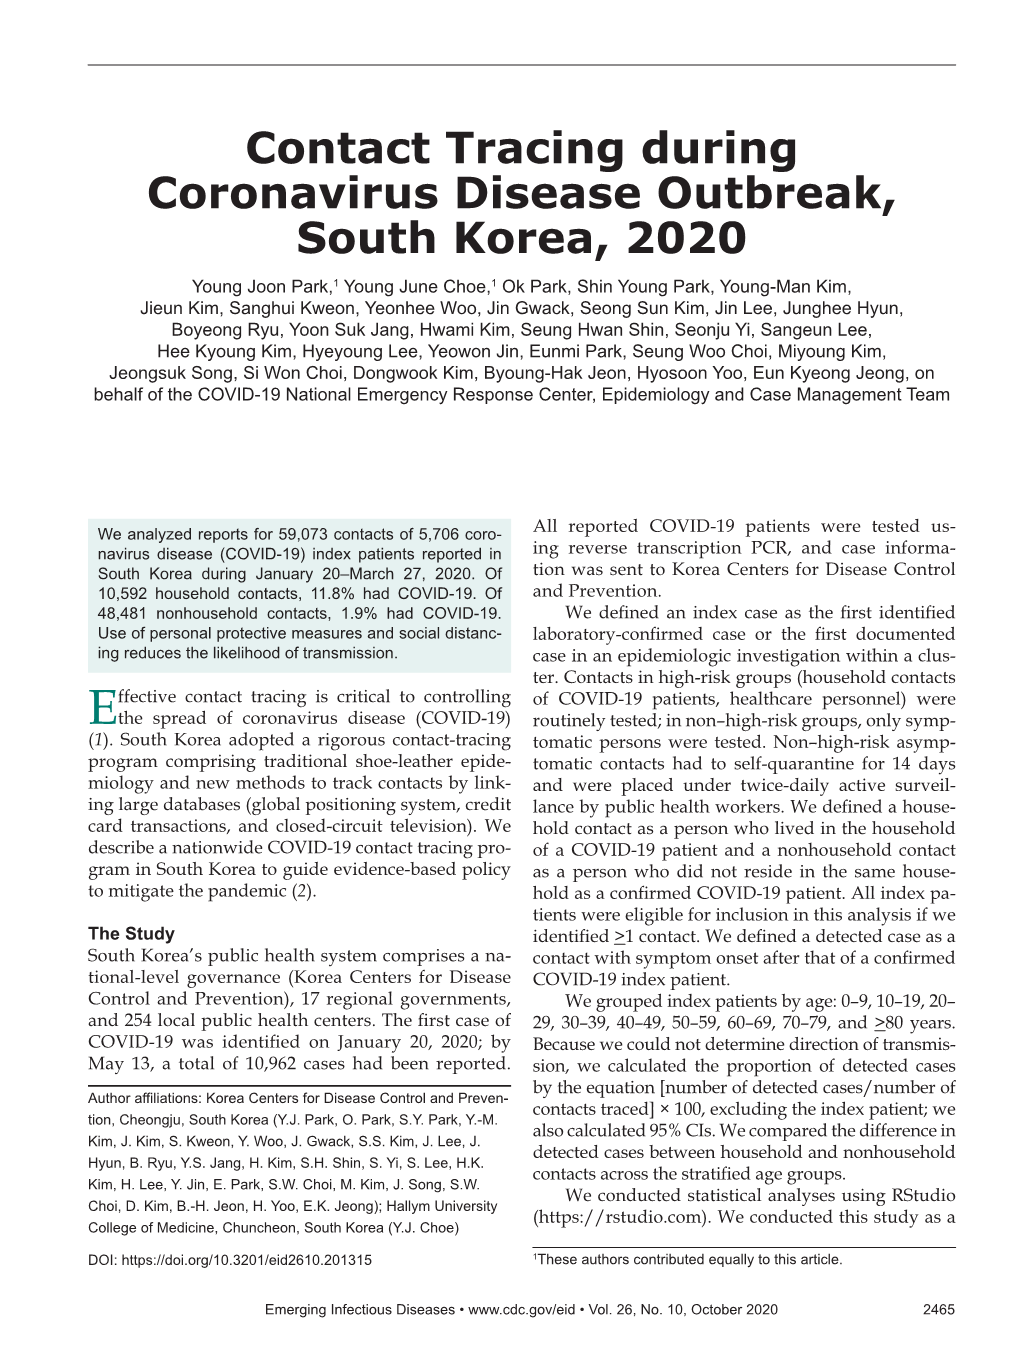 Contact Tracing During Coronavirus Disease Outbreak, South Korea, 2020